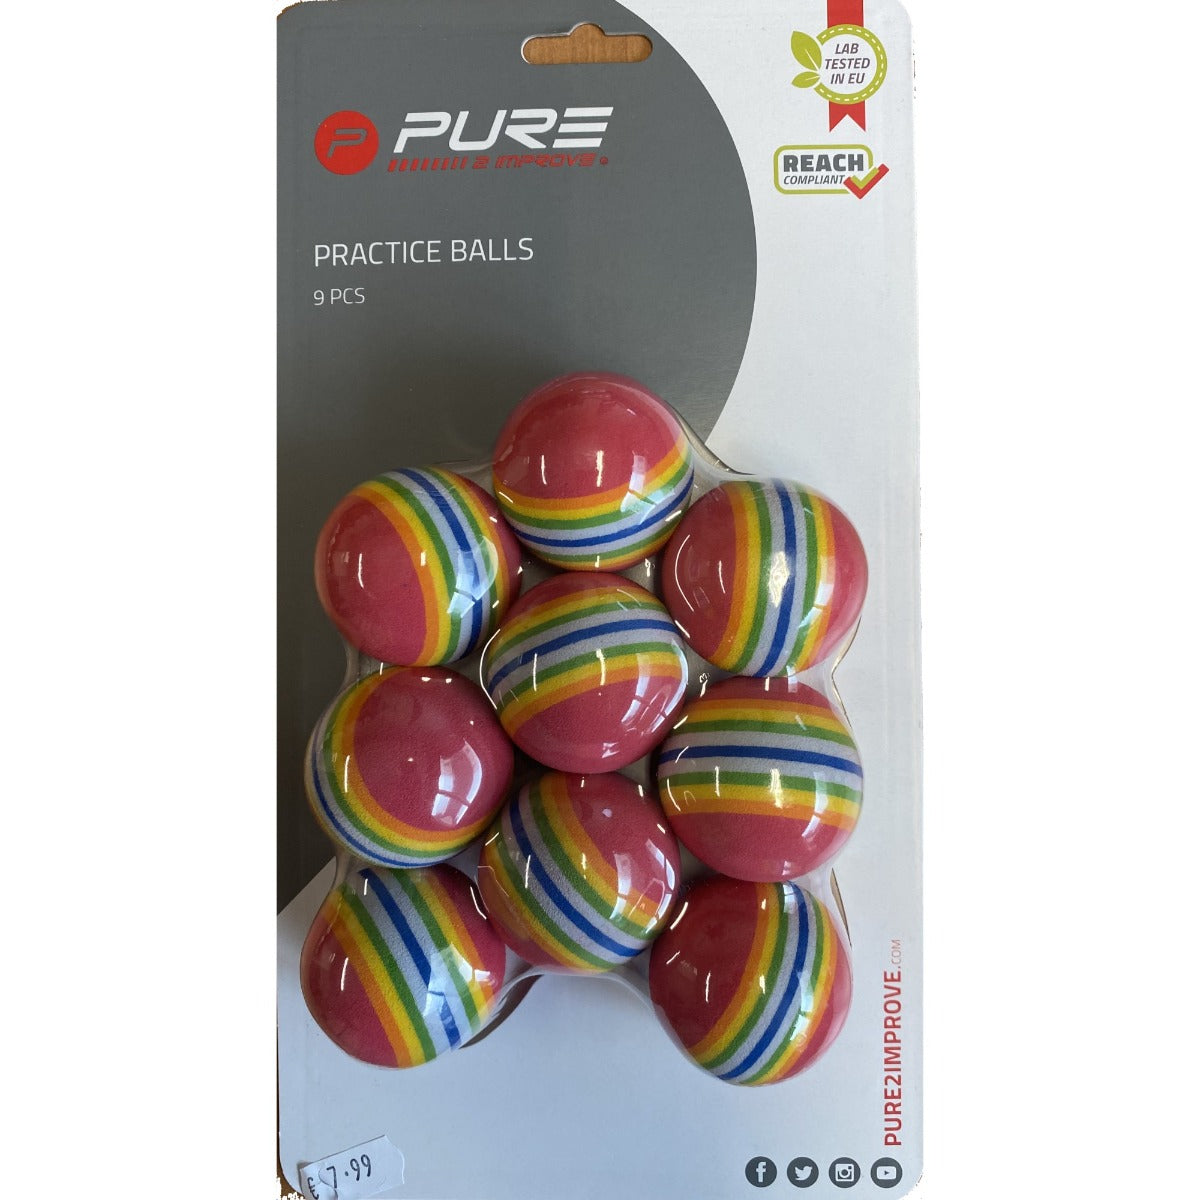 Pure 2 Improve Golf Practice Ball